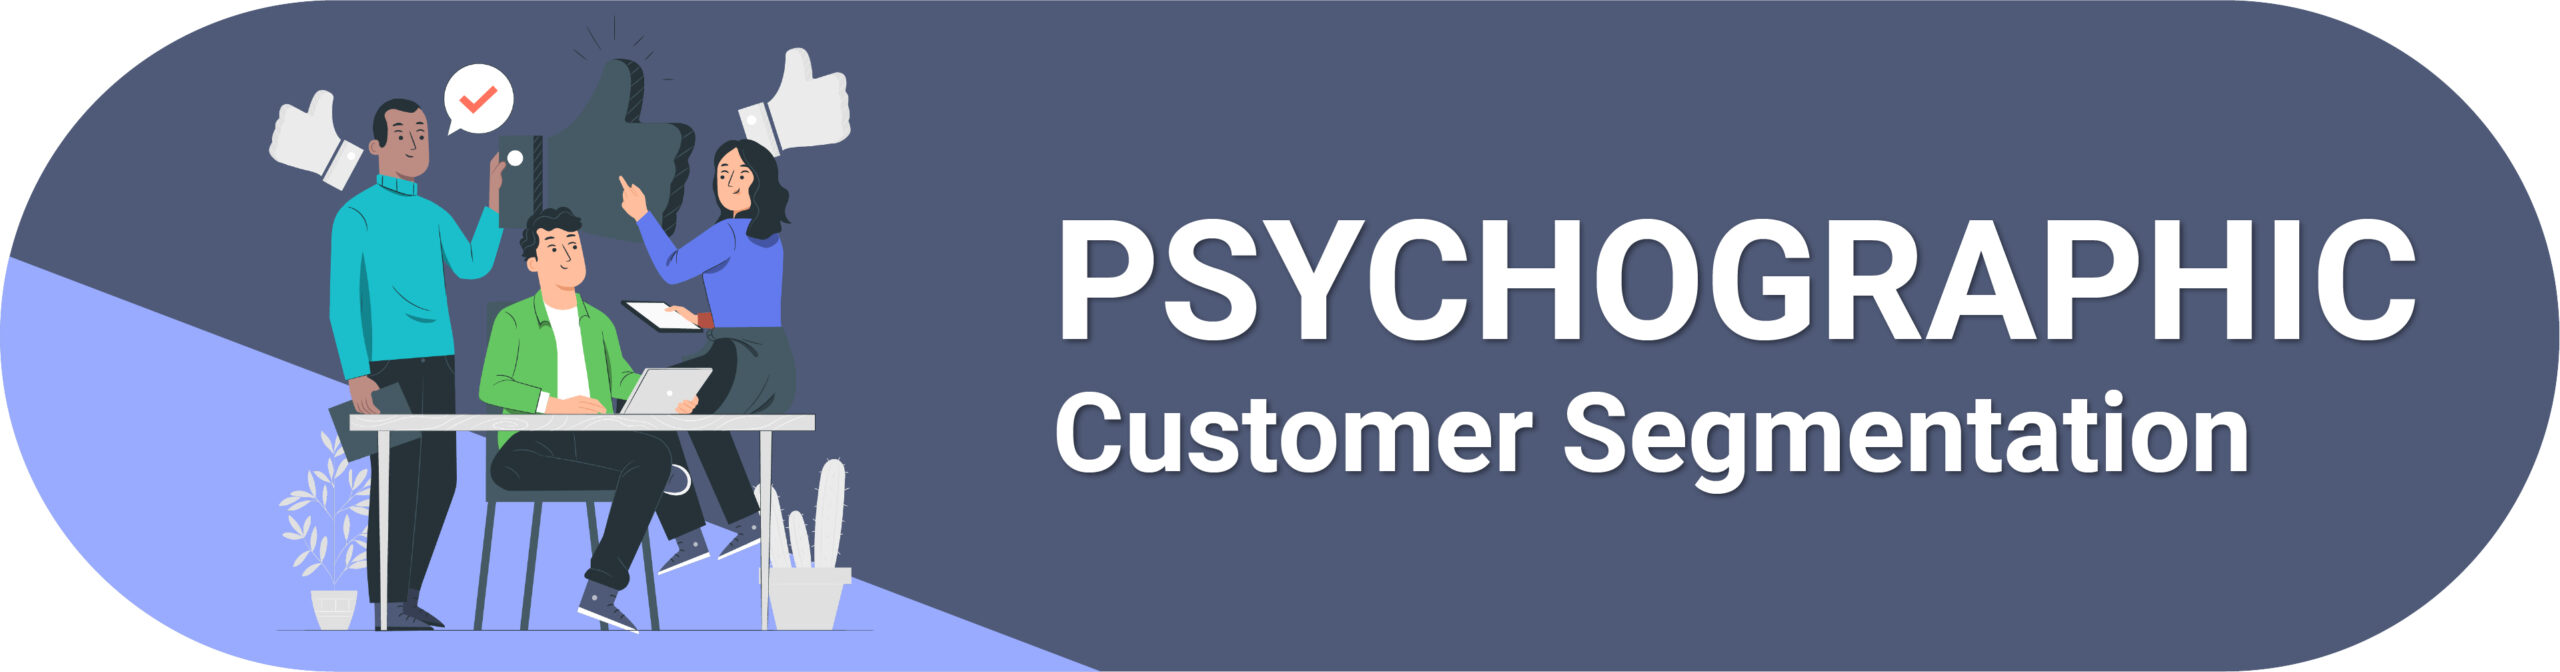 Psychographic customer segmentation